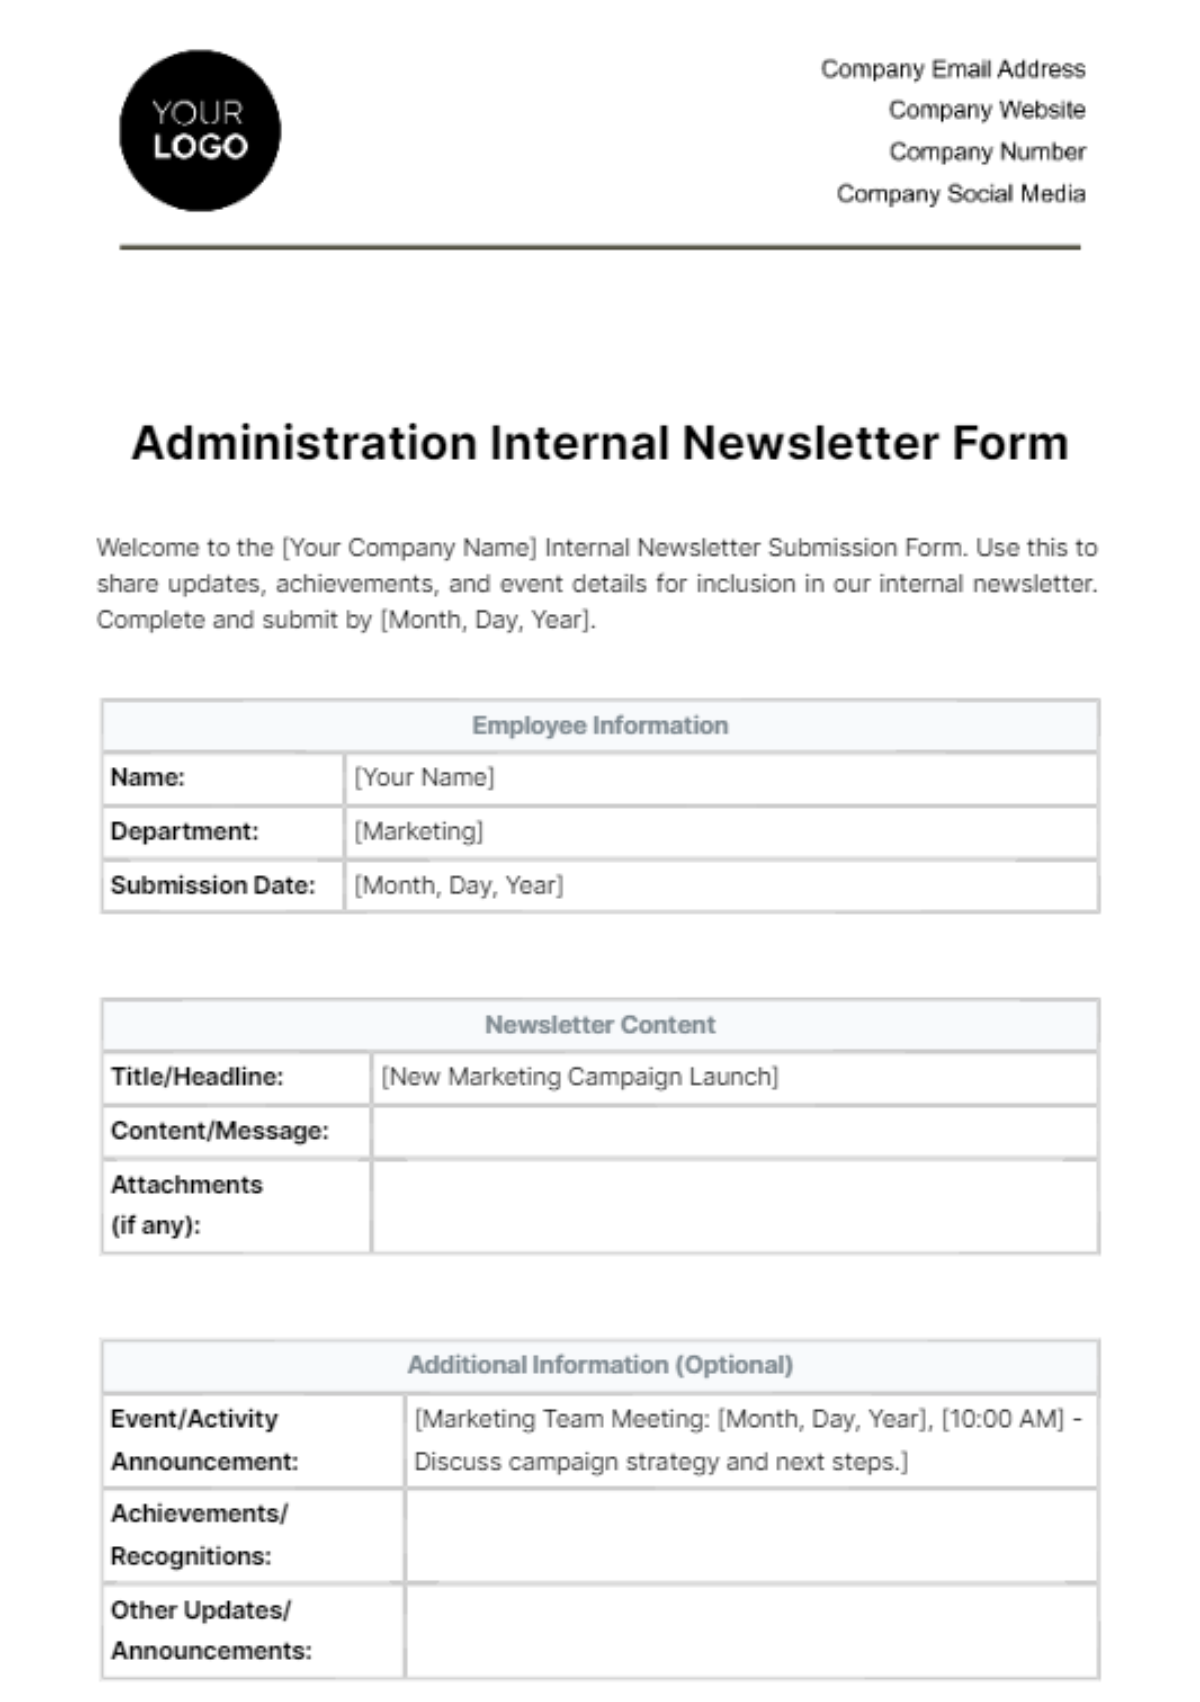 Administration Internal Newsletter Form Template